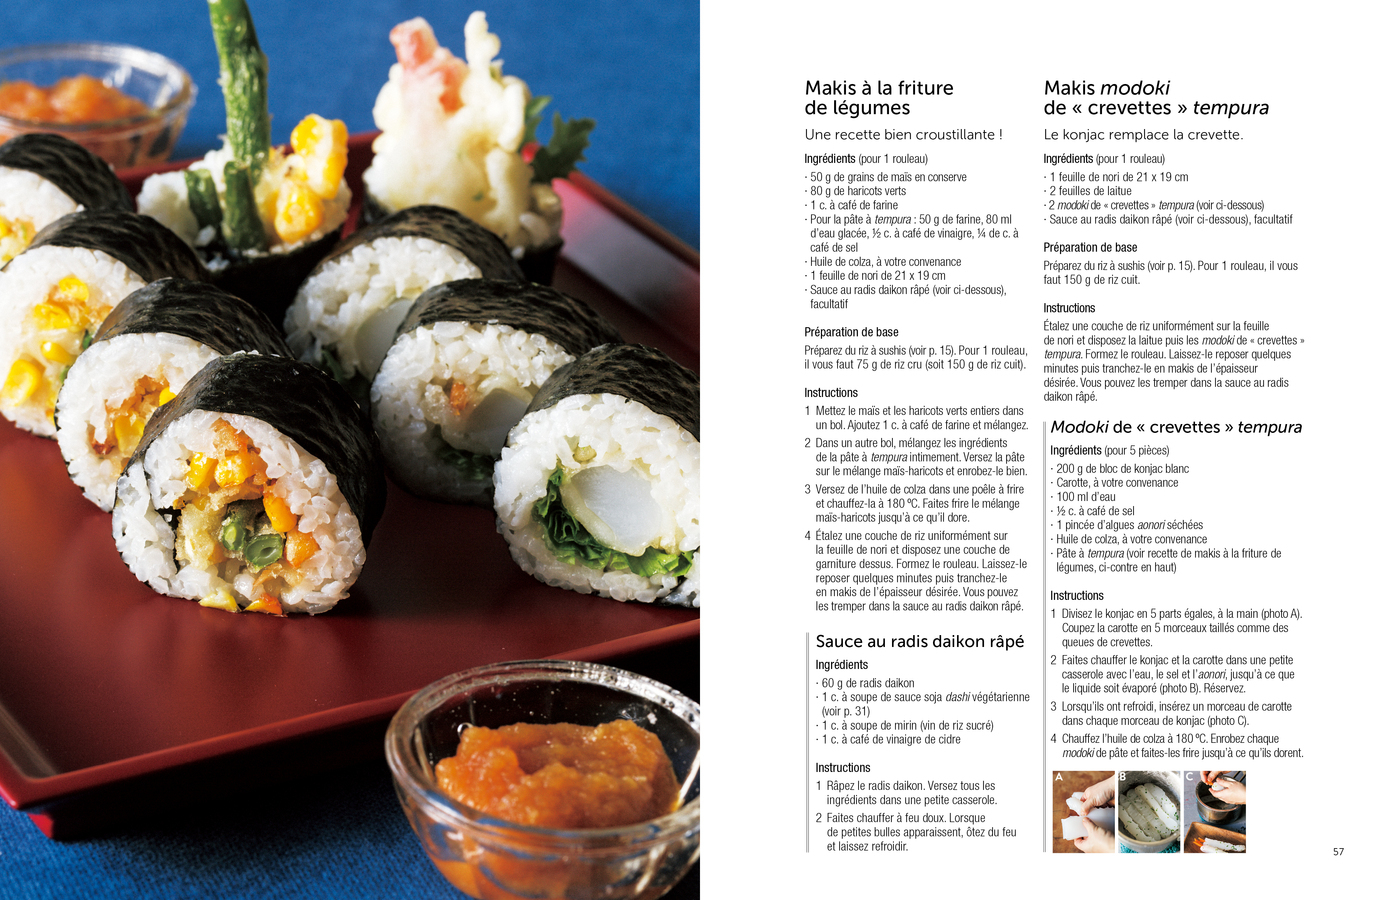 Sushi Modoki by Iina, editions of La Plage: inside page